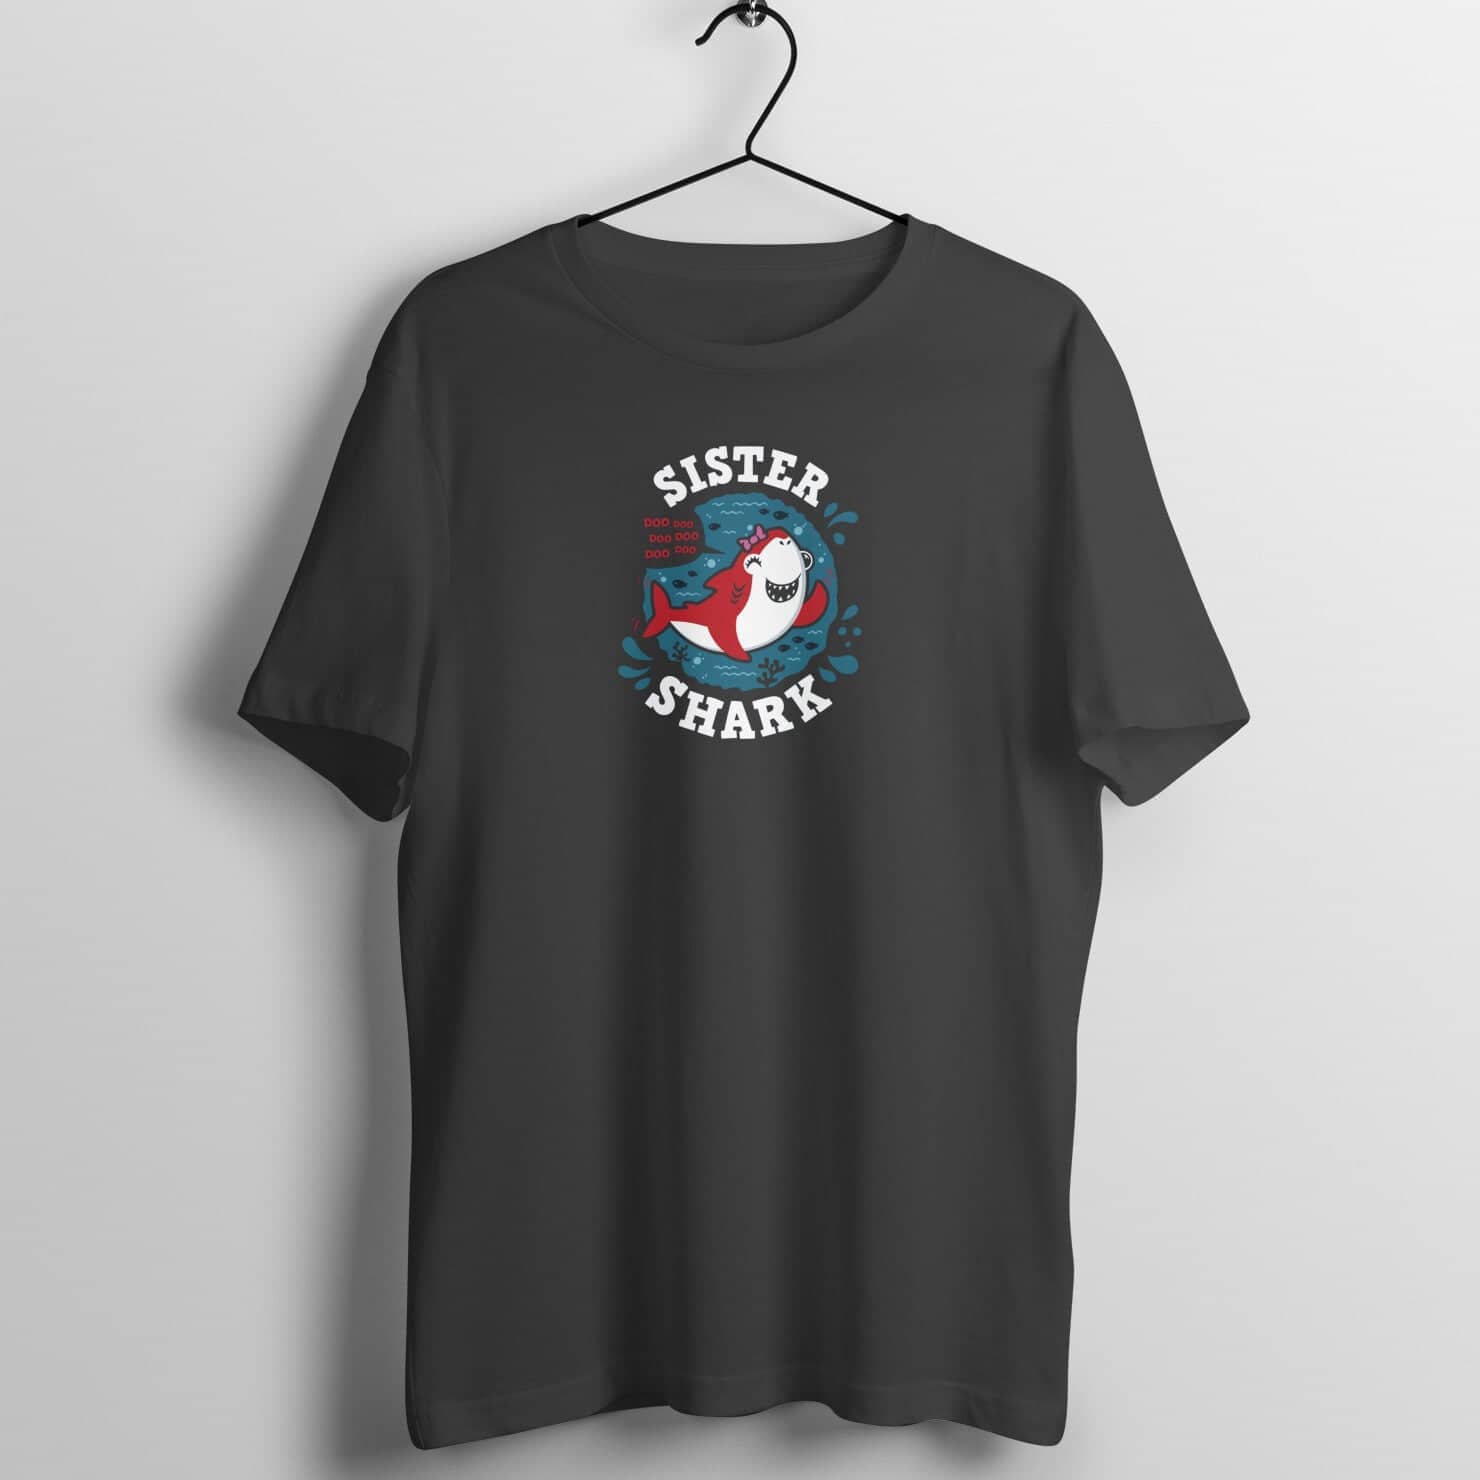 Sister Shark Exclusive Black T Shirt for Women Printrove Black S 